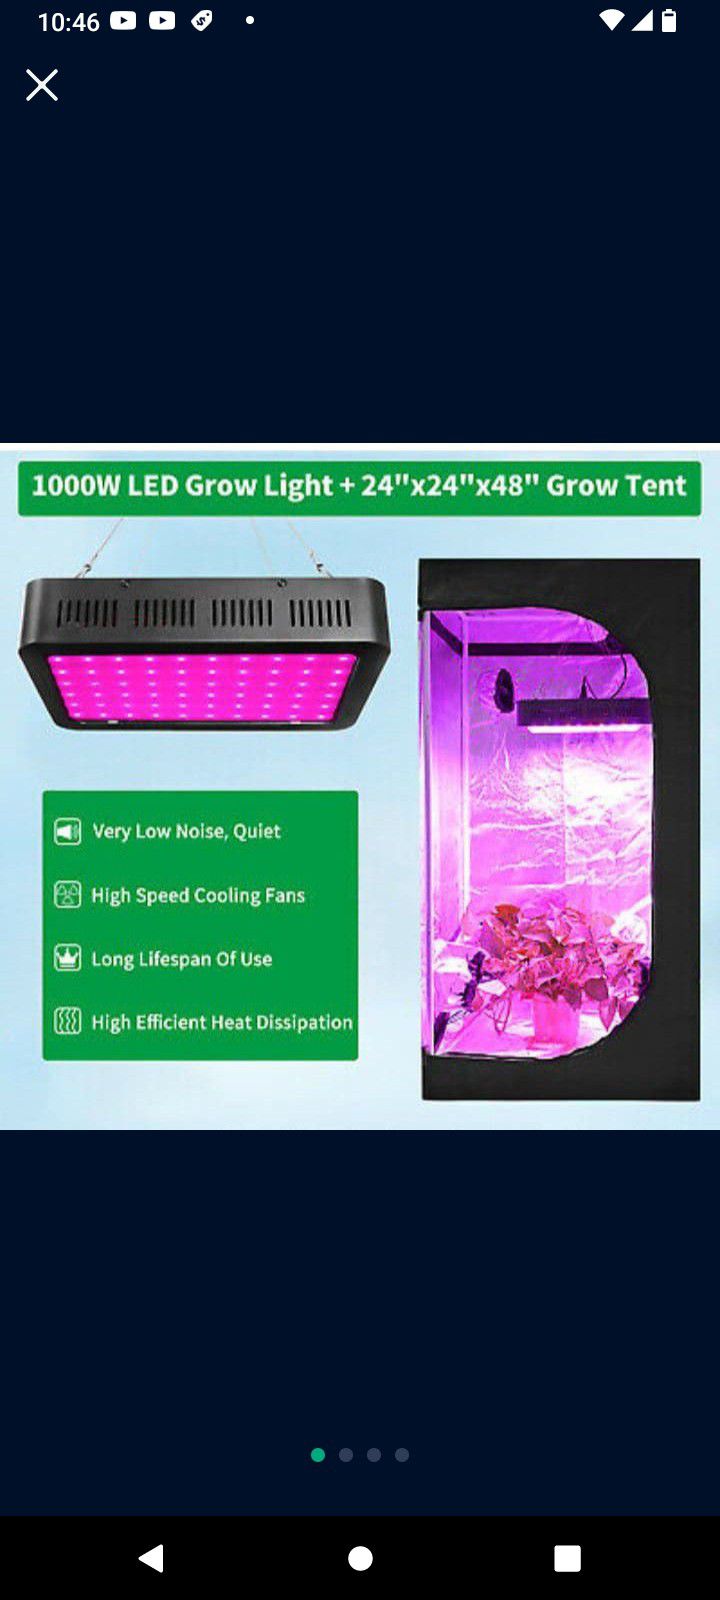 Indoor Grow Tent Kit With 1000W LED Grow Light